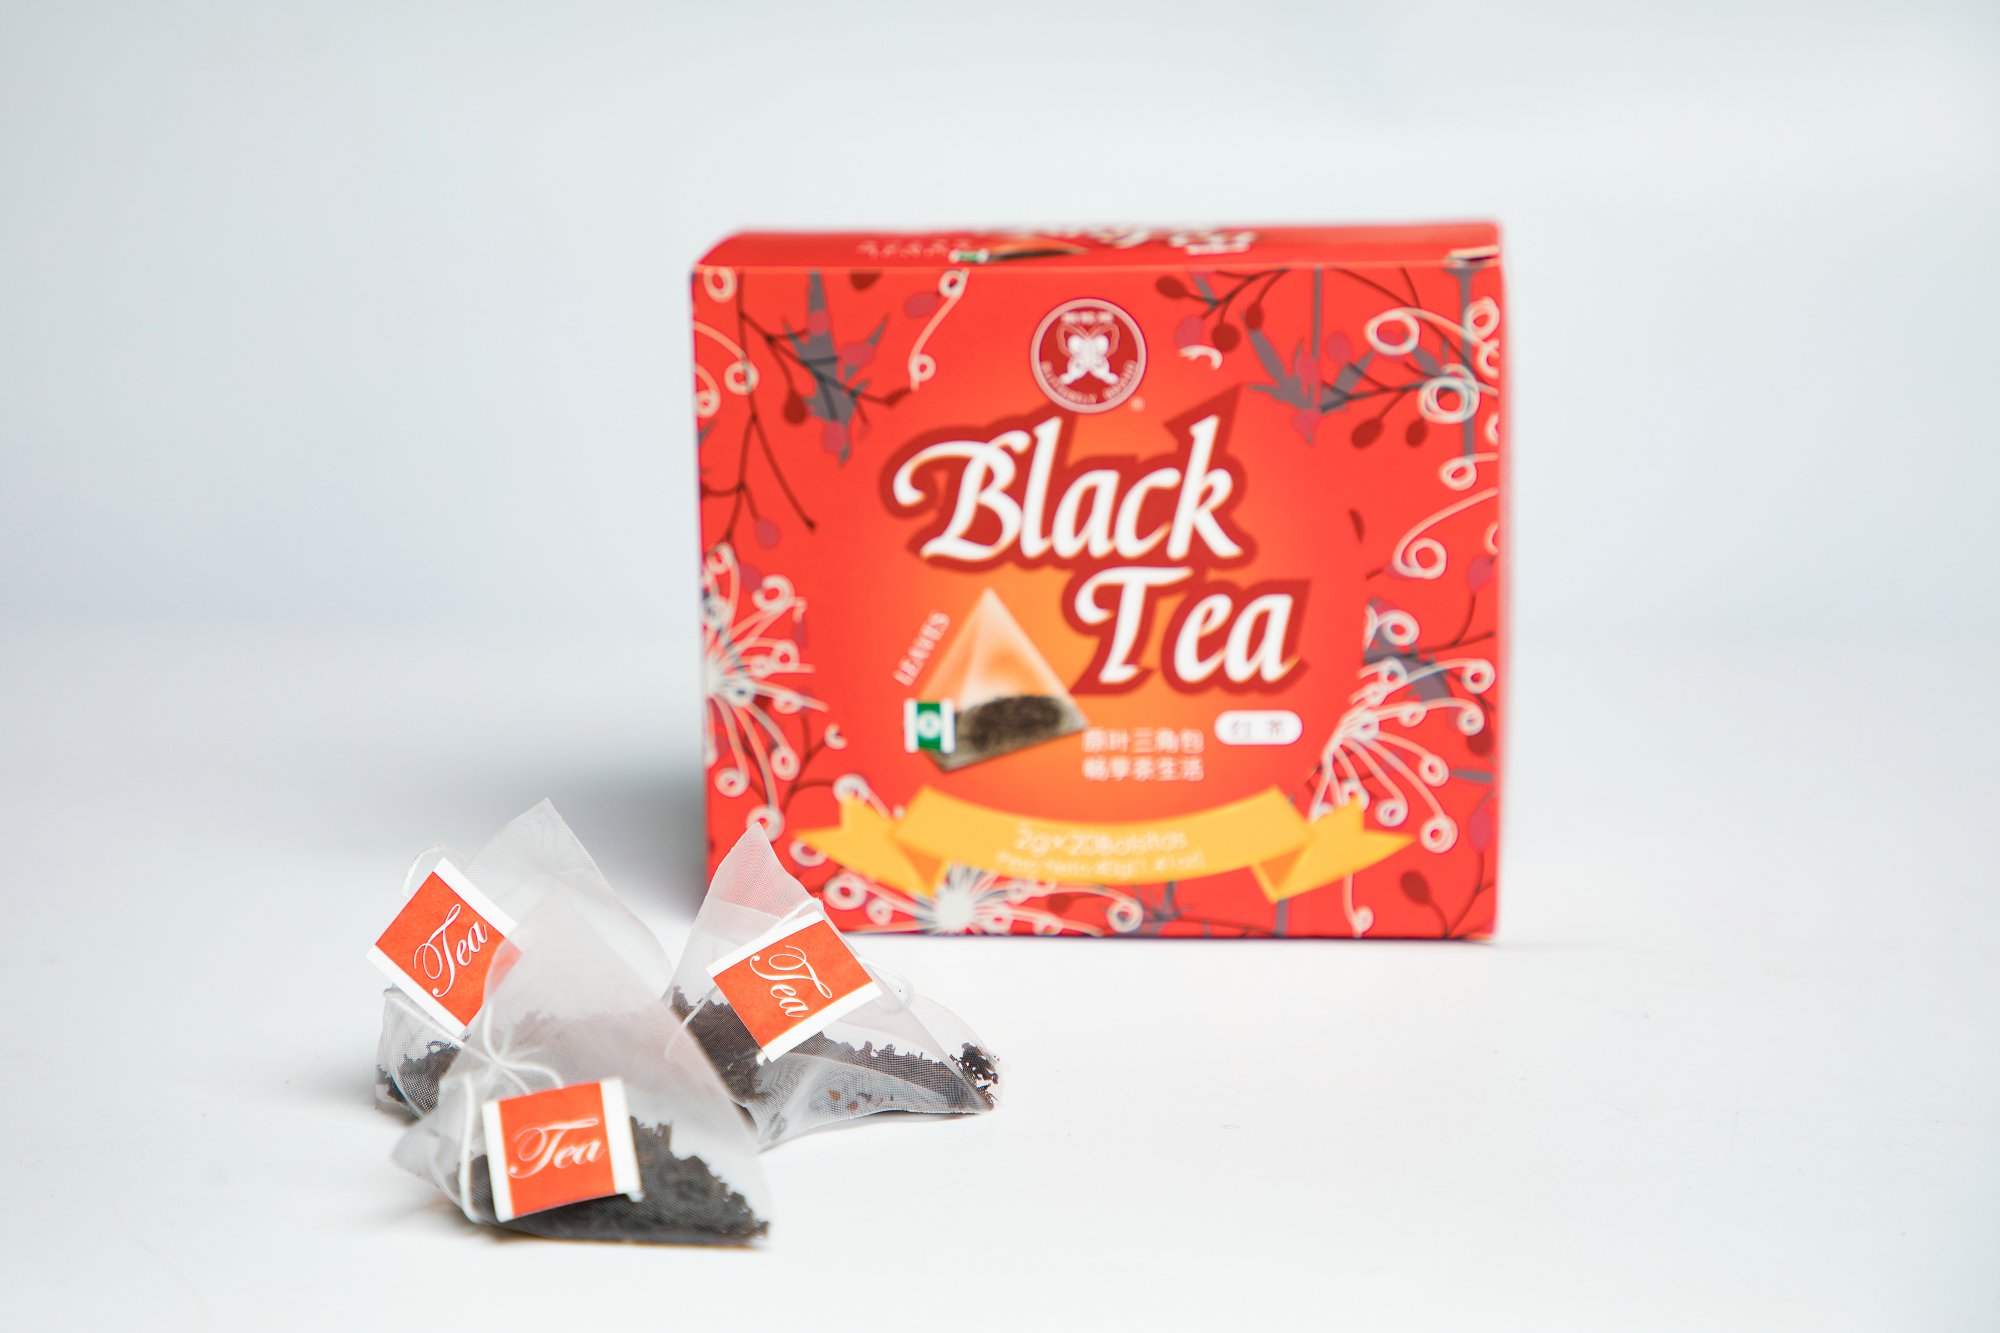 Black Pyramid Tea Bags #BT056 2GX20BAGS